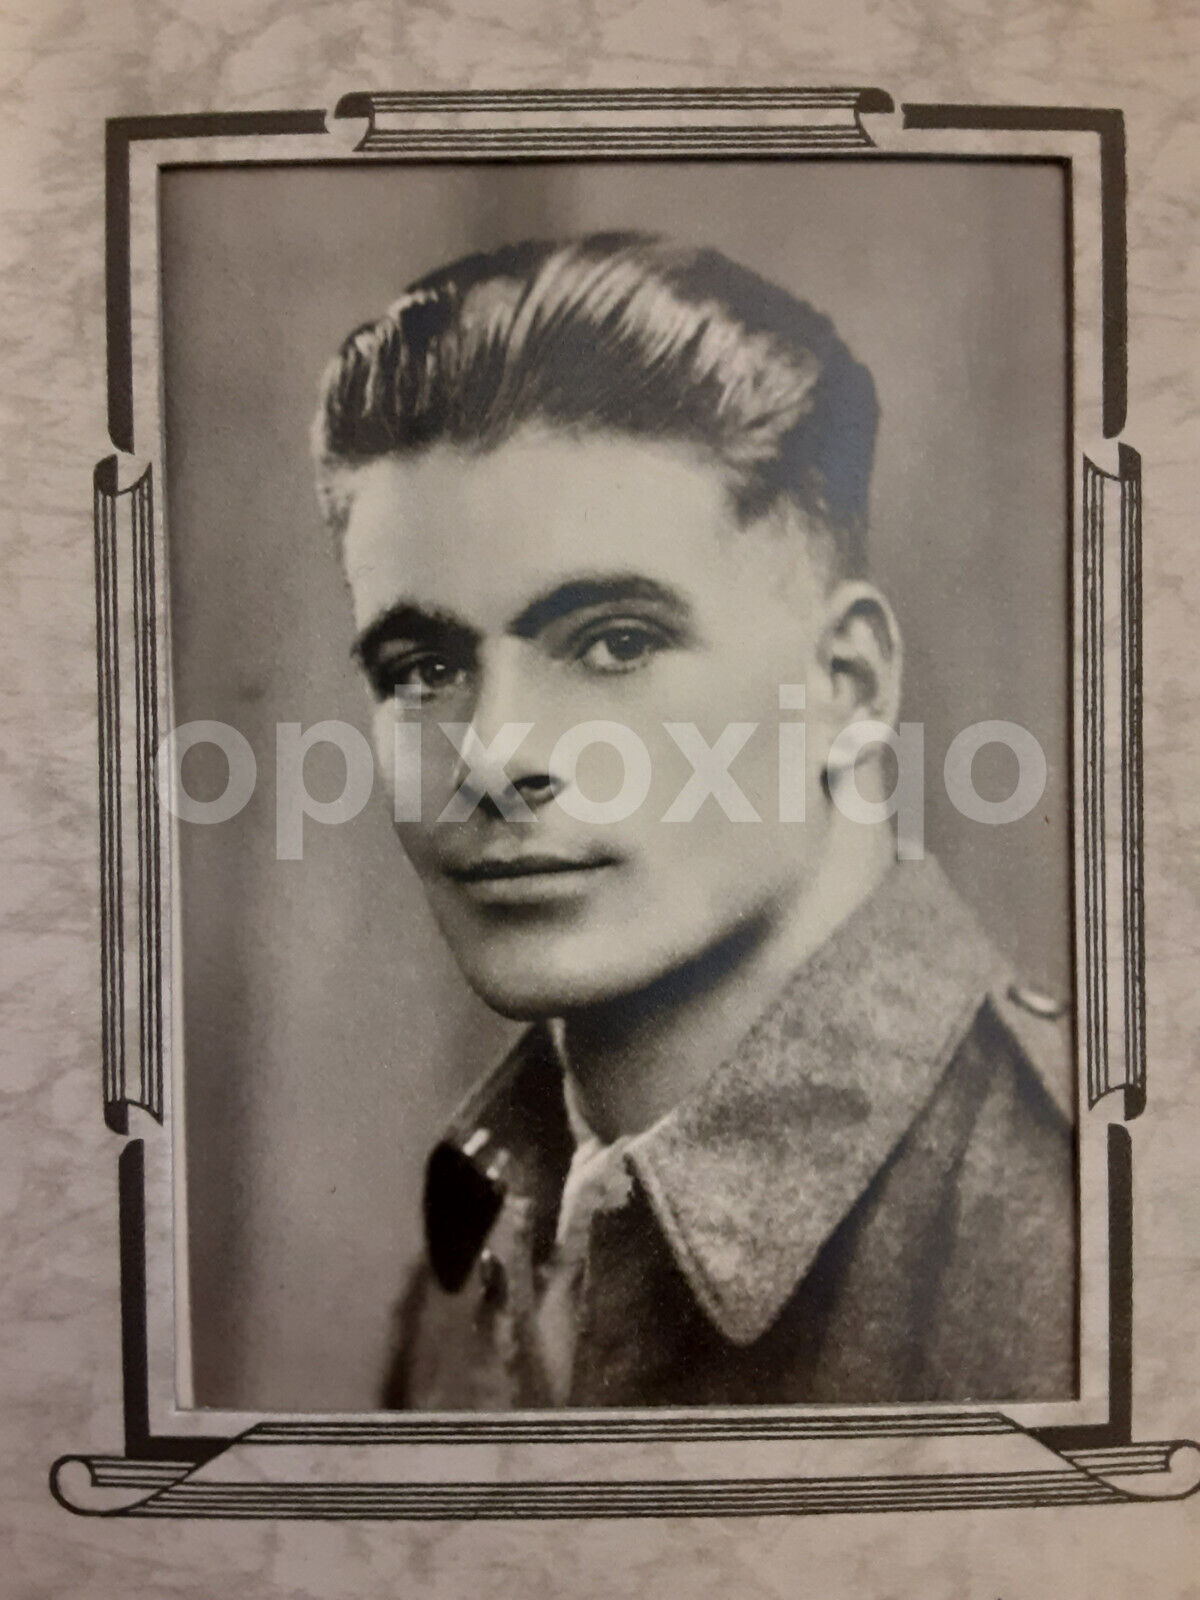 Handsome Man, GI Soldier?, Winnipeg Canada WWII-era 1940's Photo/Cardboard Frame